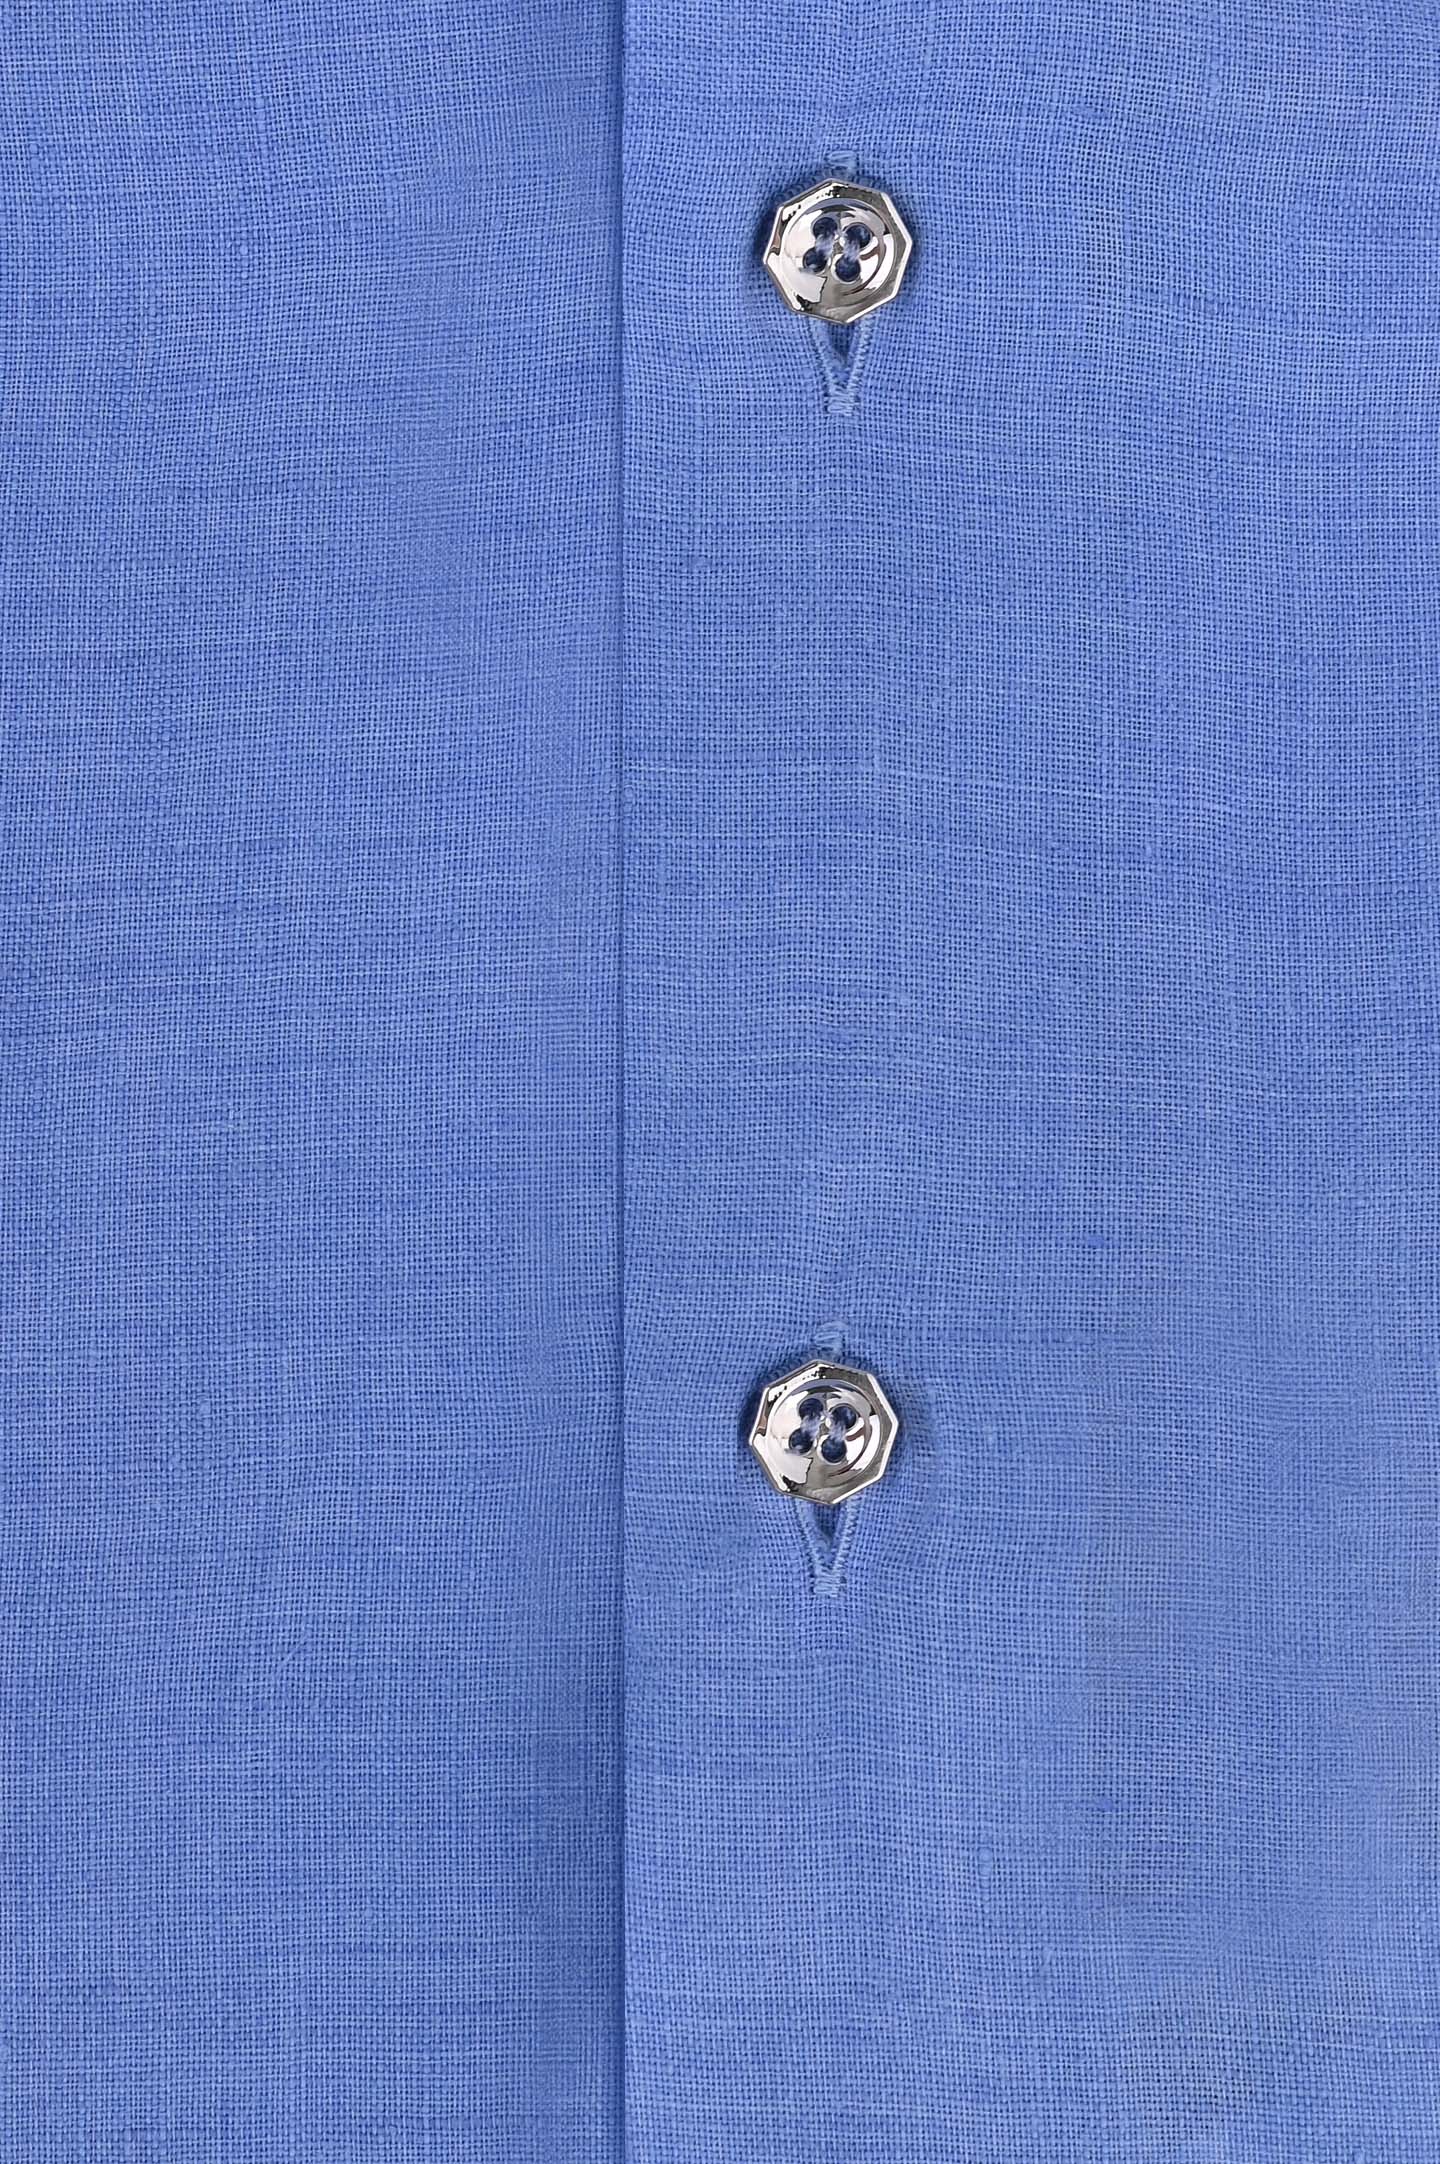 Рубашка STEFANO RICCI MC006031 L1180, цвет: Голубой, Мужской